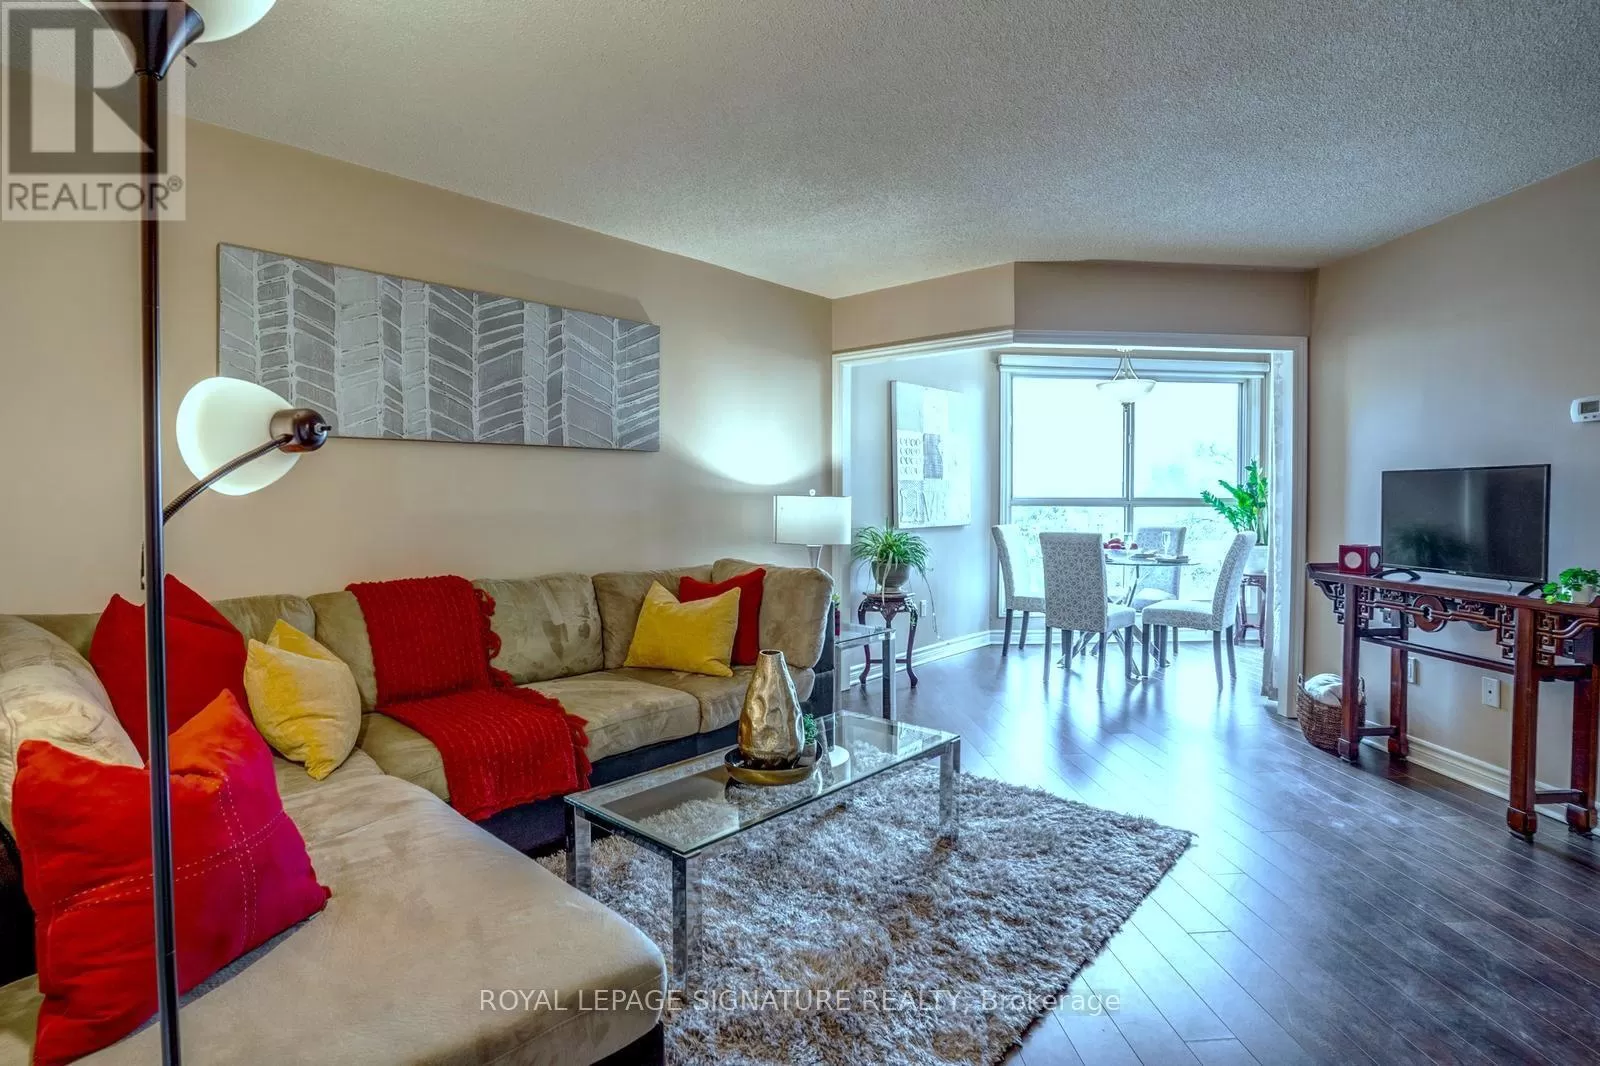 Apartment for rent: 430 - 8351 Mclaughlin Road S, Brampton, Ontario L6Y 4H8